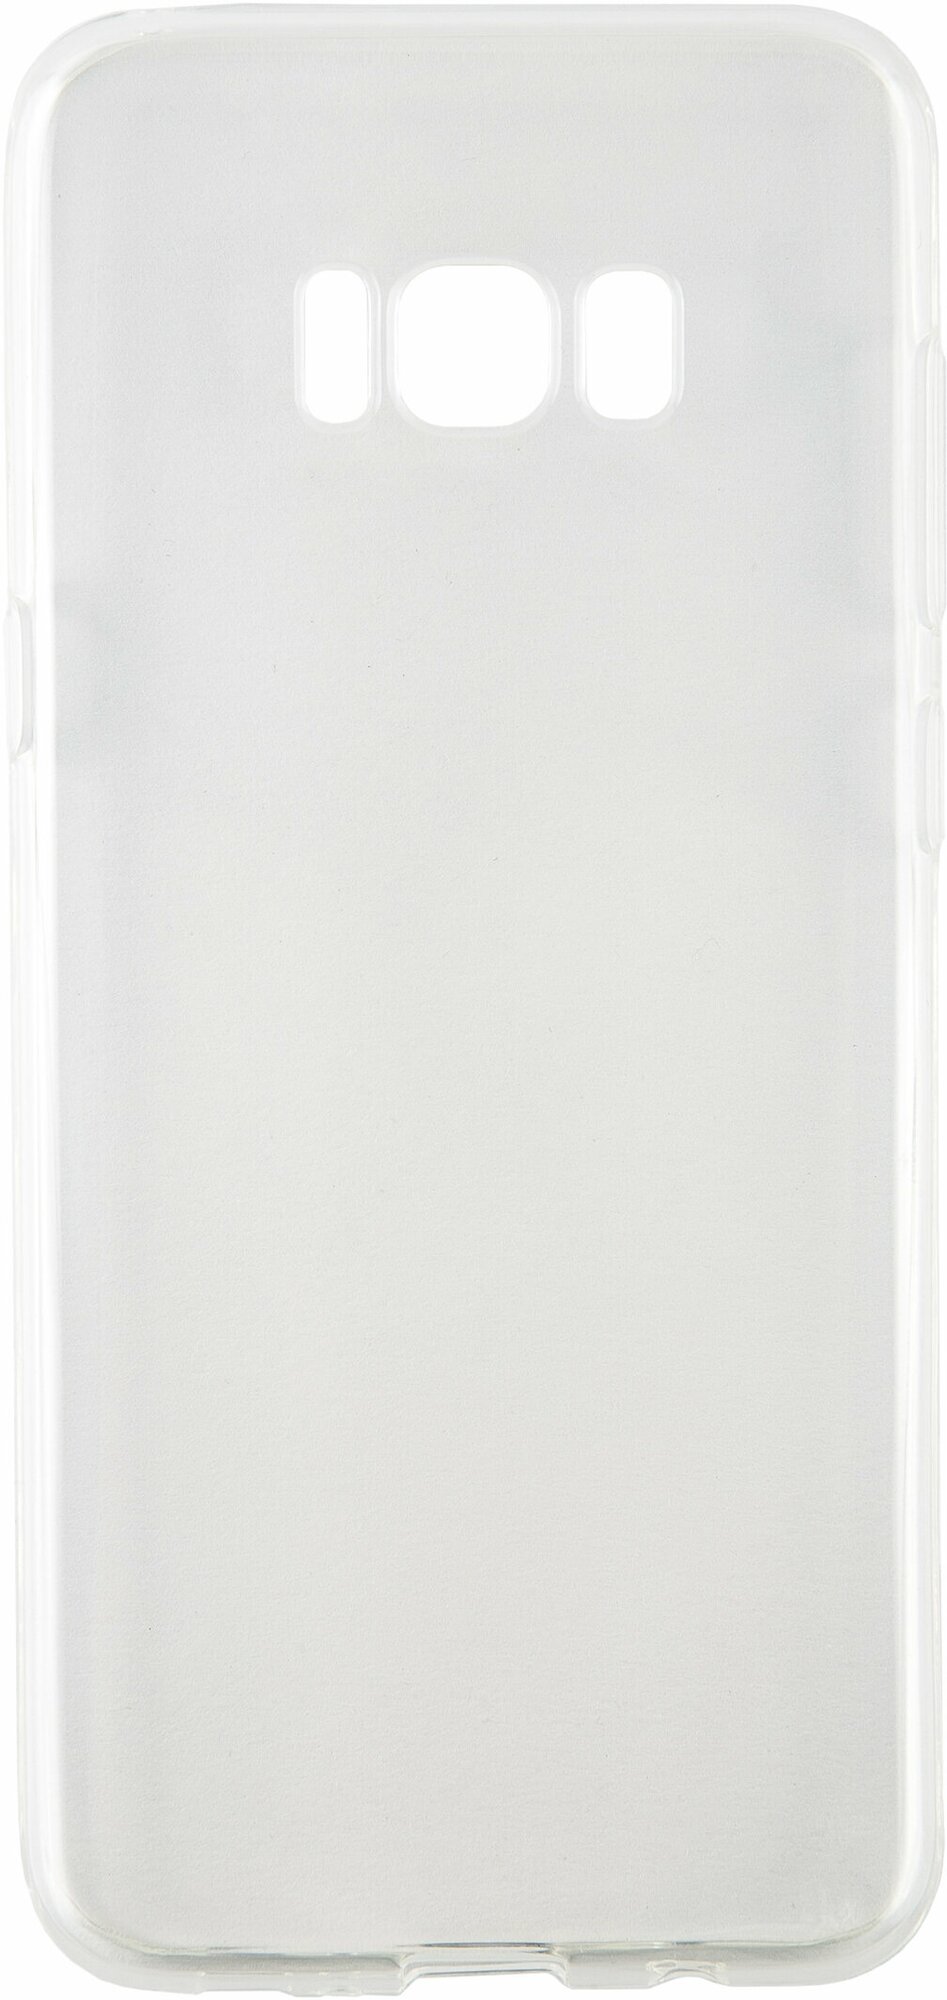 Накладка на Samsung Galaxy S8 Plus/Самсунг Гэлакси С8 Плюс, чехол накладка силикон, прозрачный